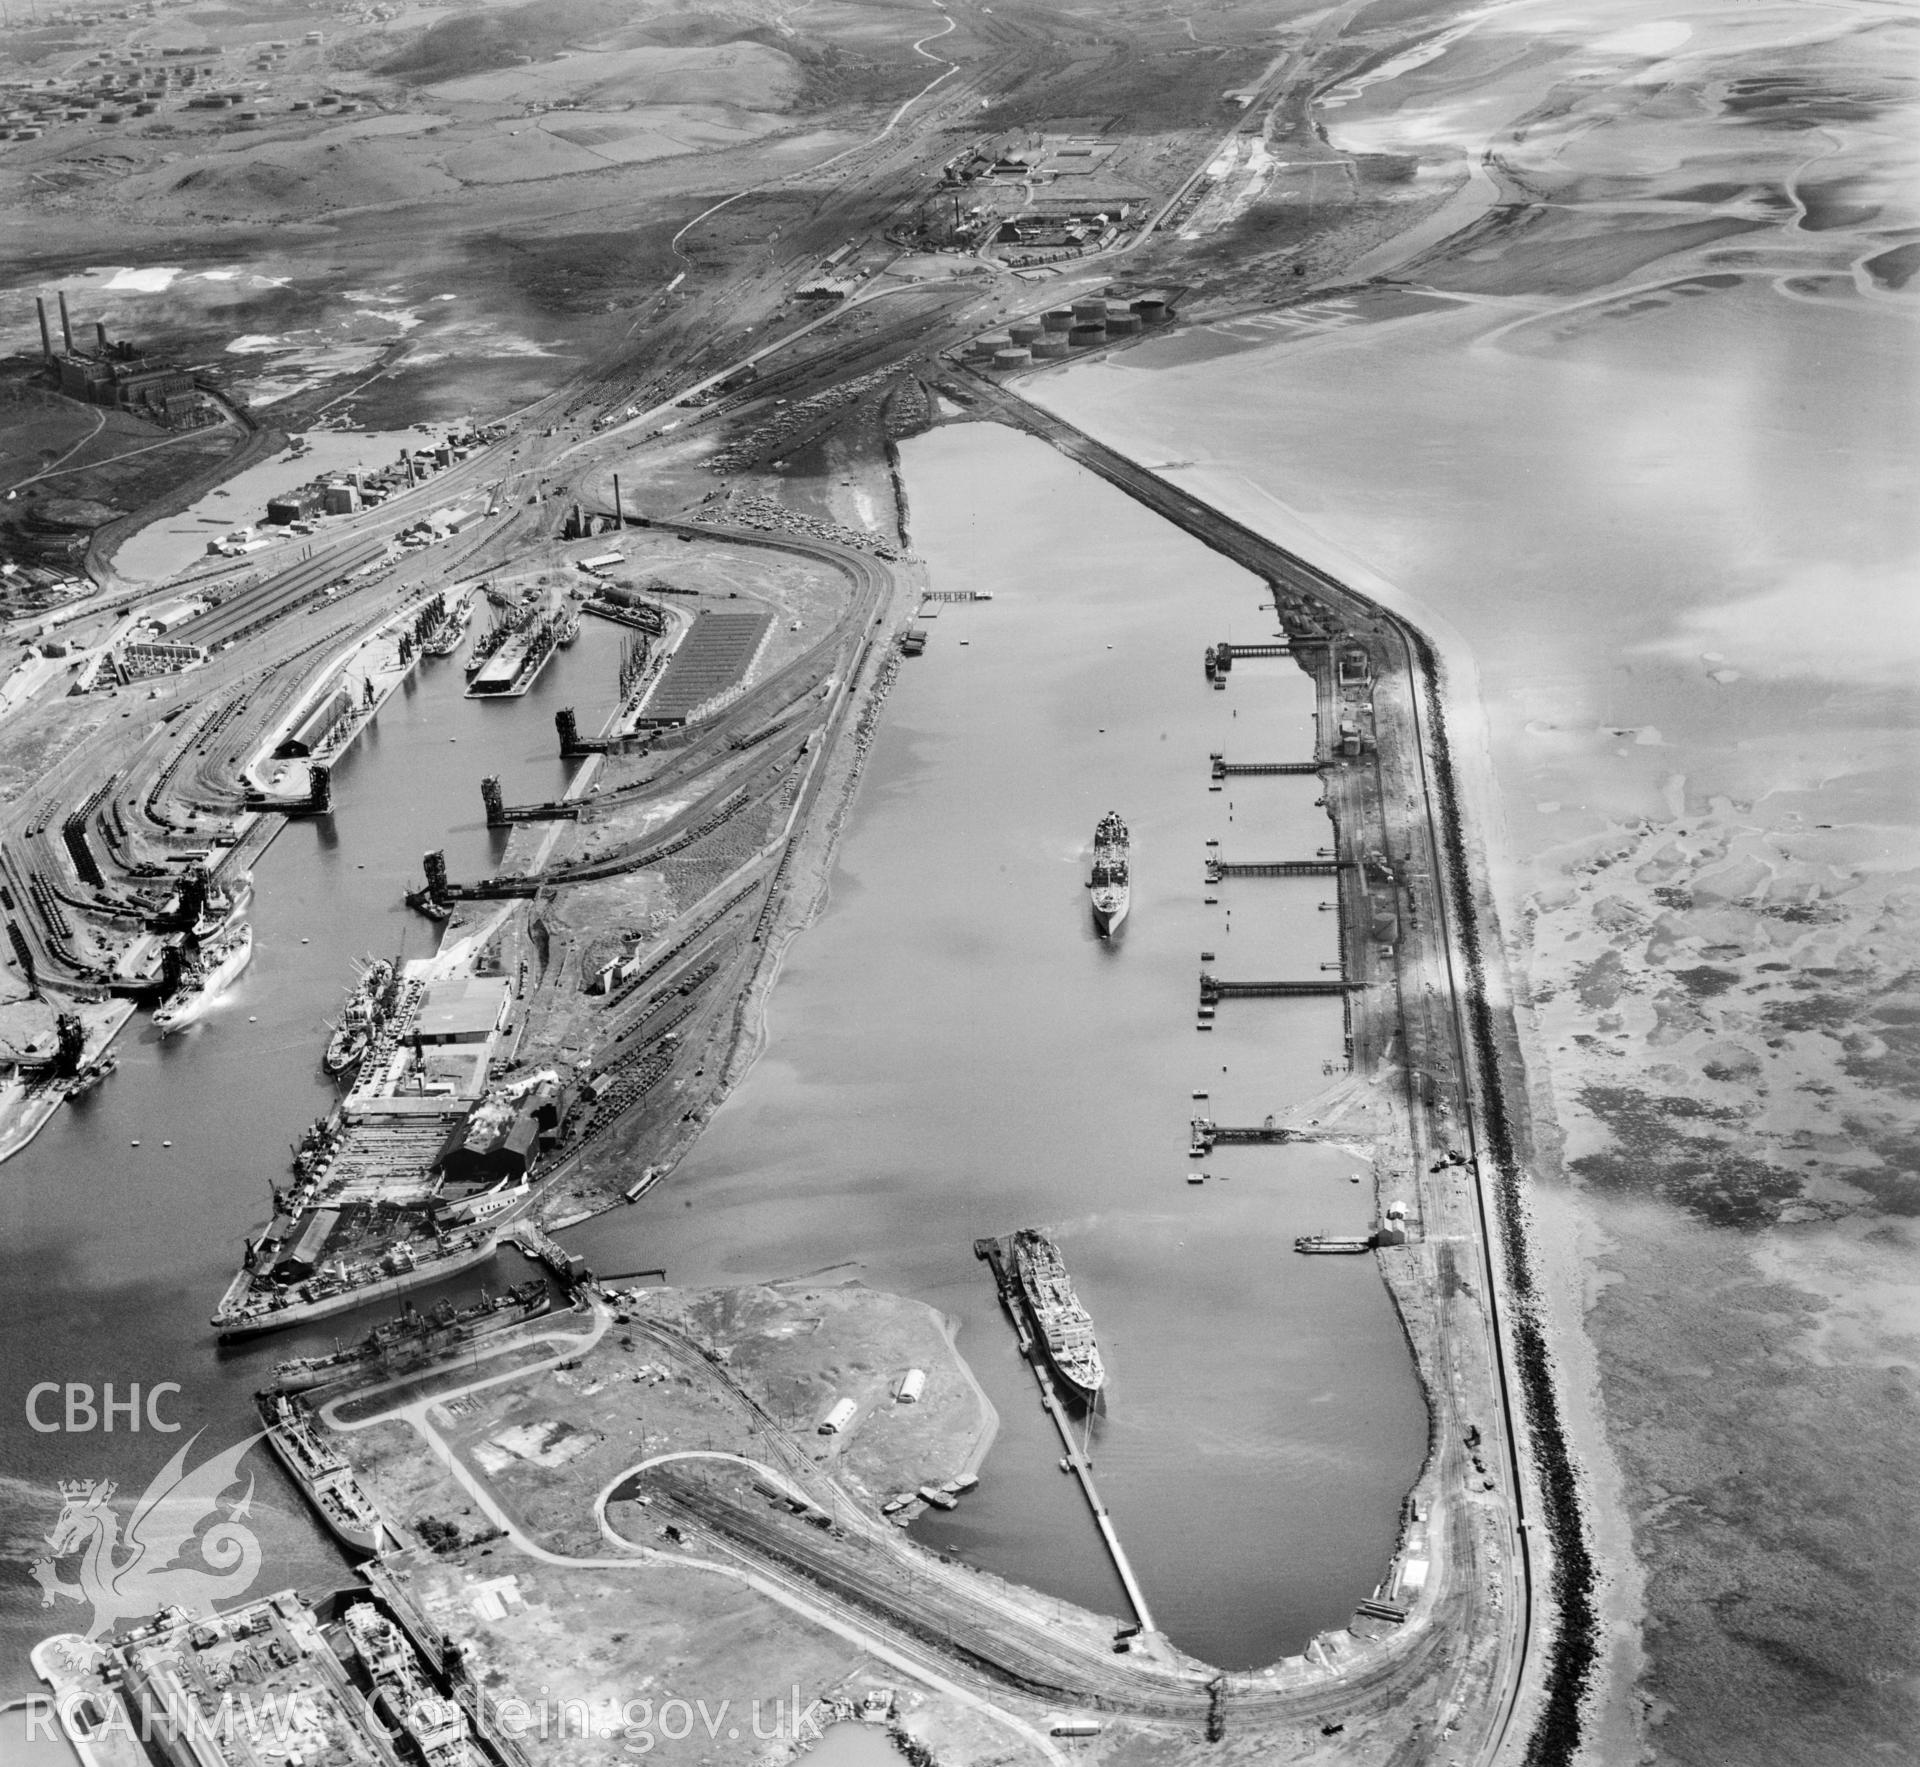 View of Swansea Docks